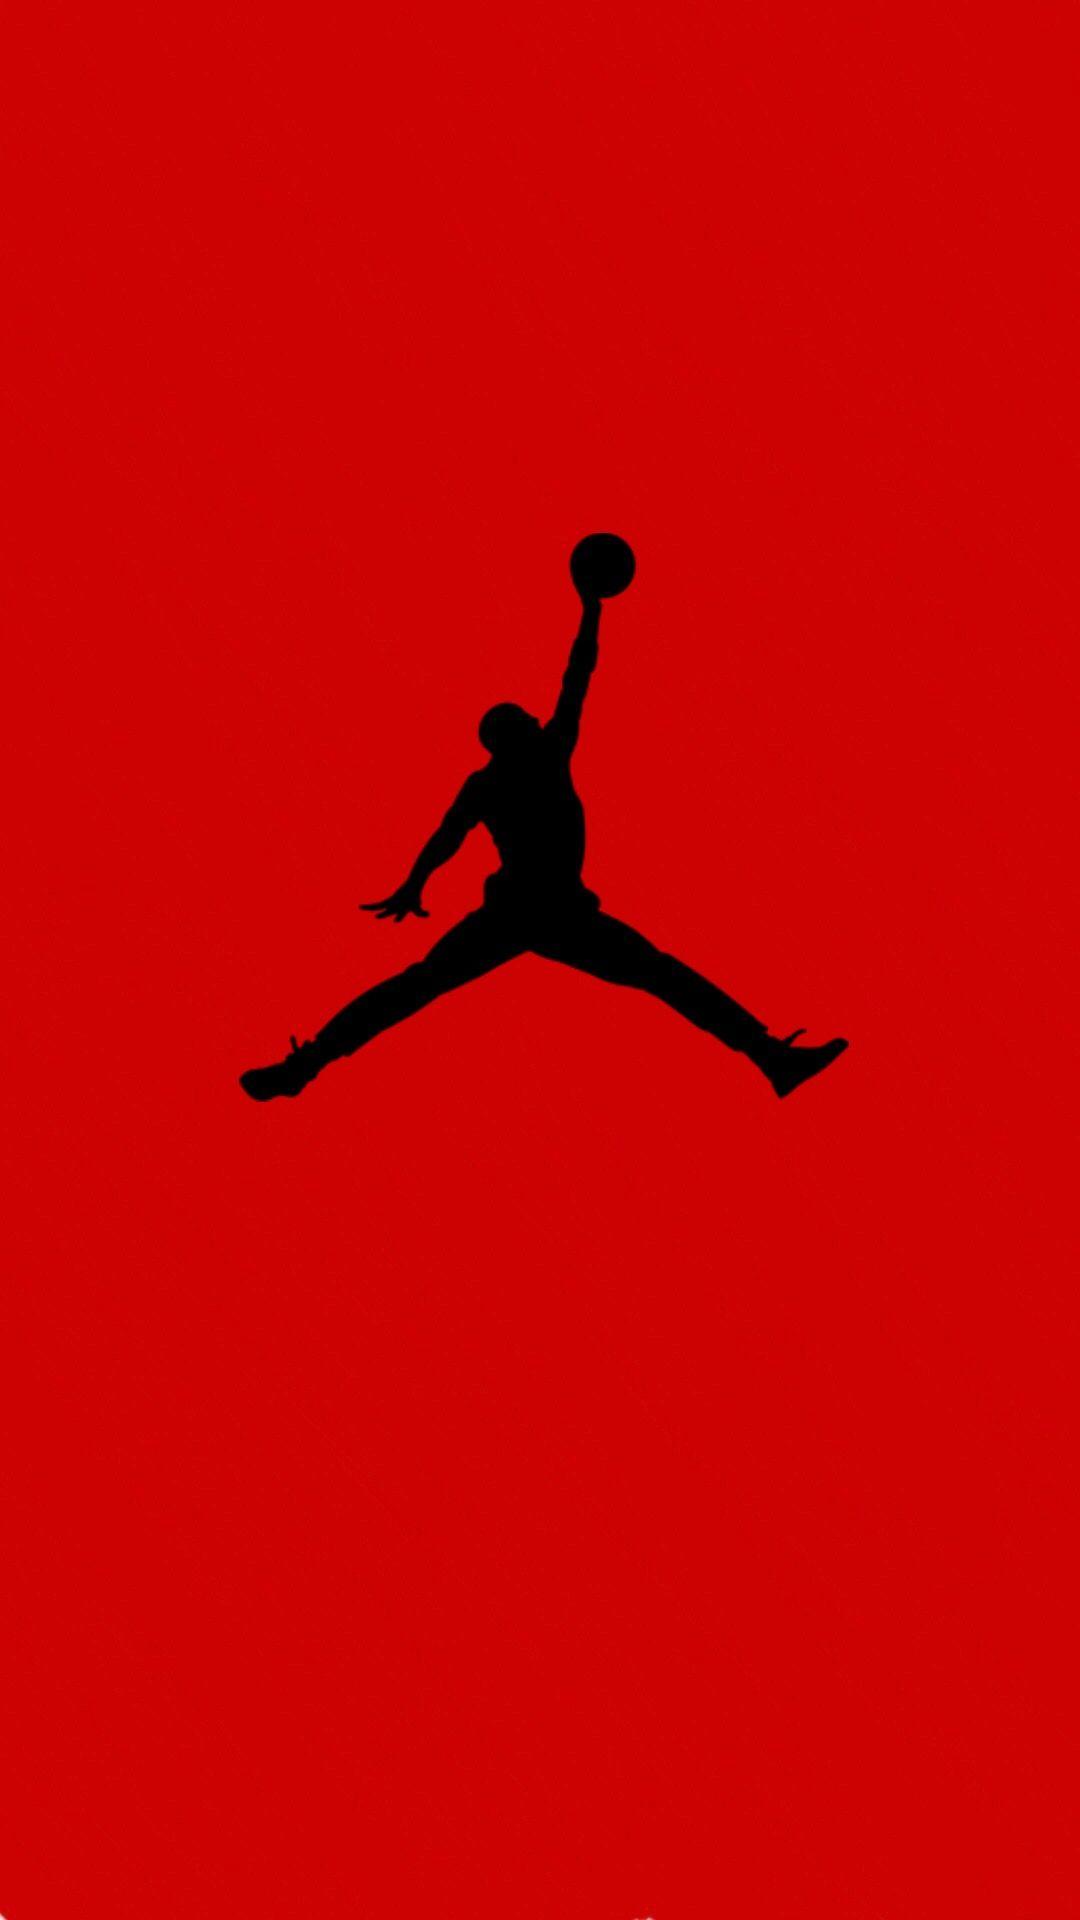 Jordan Logo - Air jordan logo iphone background | Backgrounds for iphone